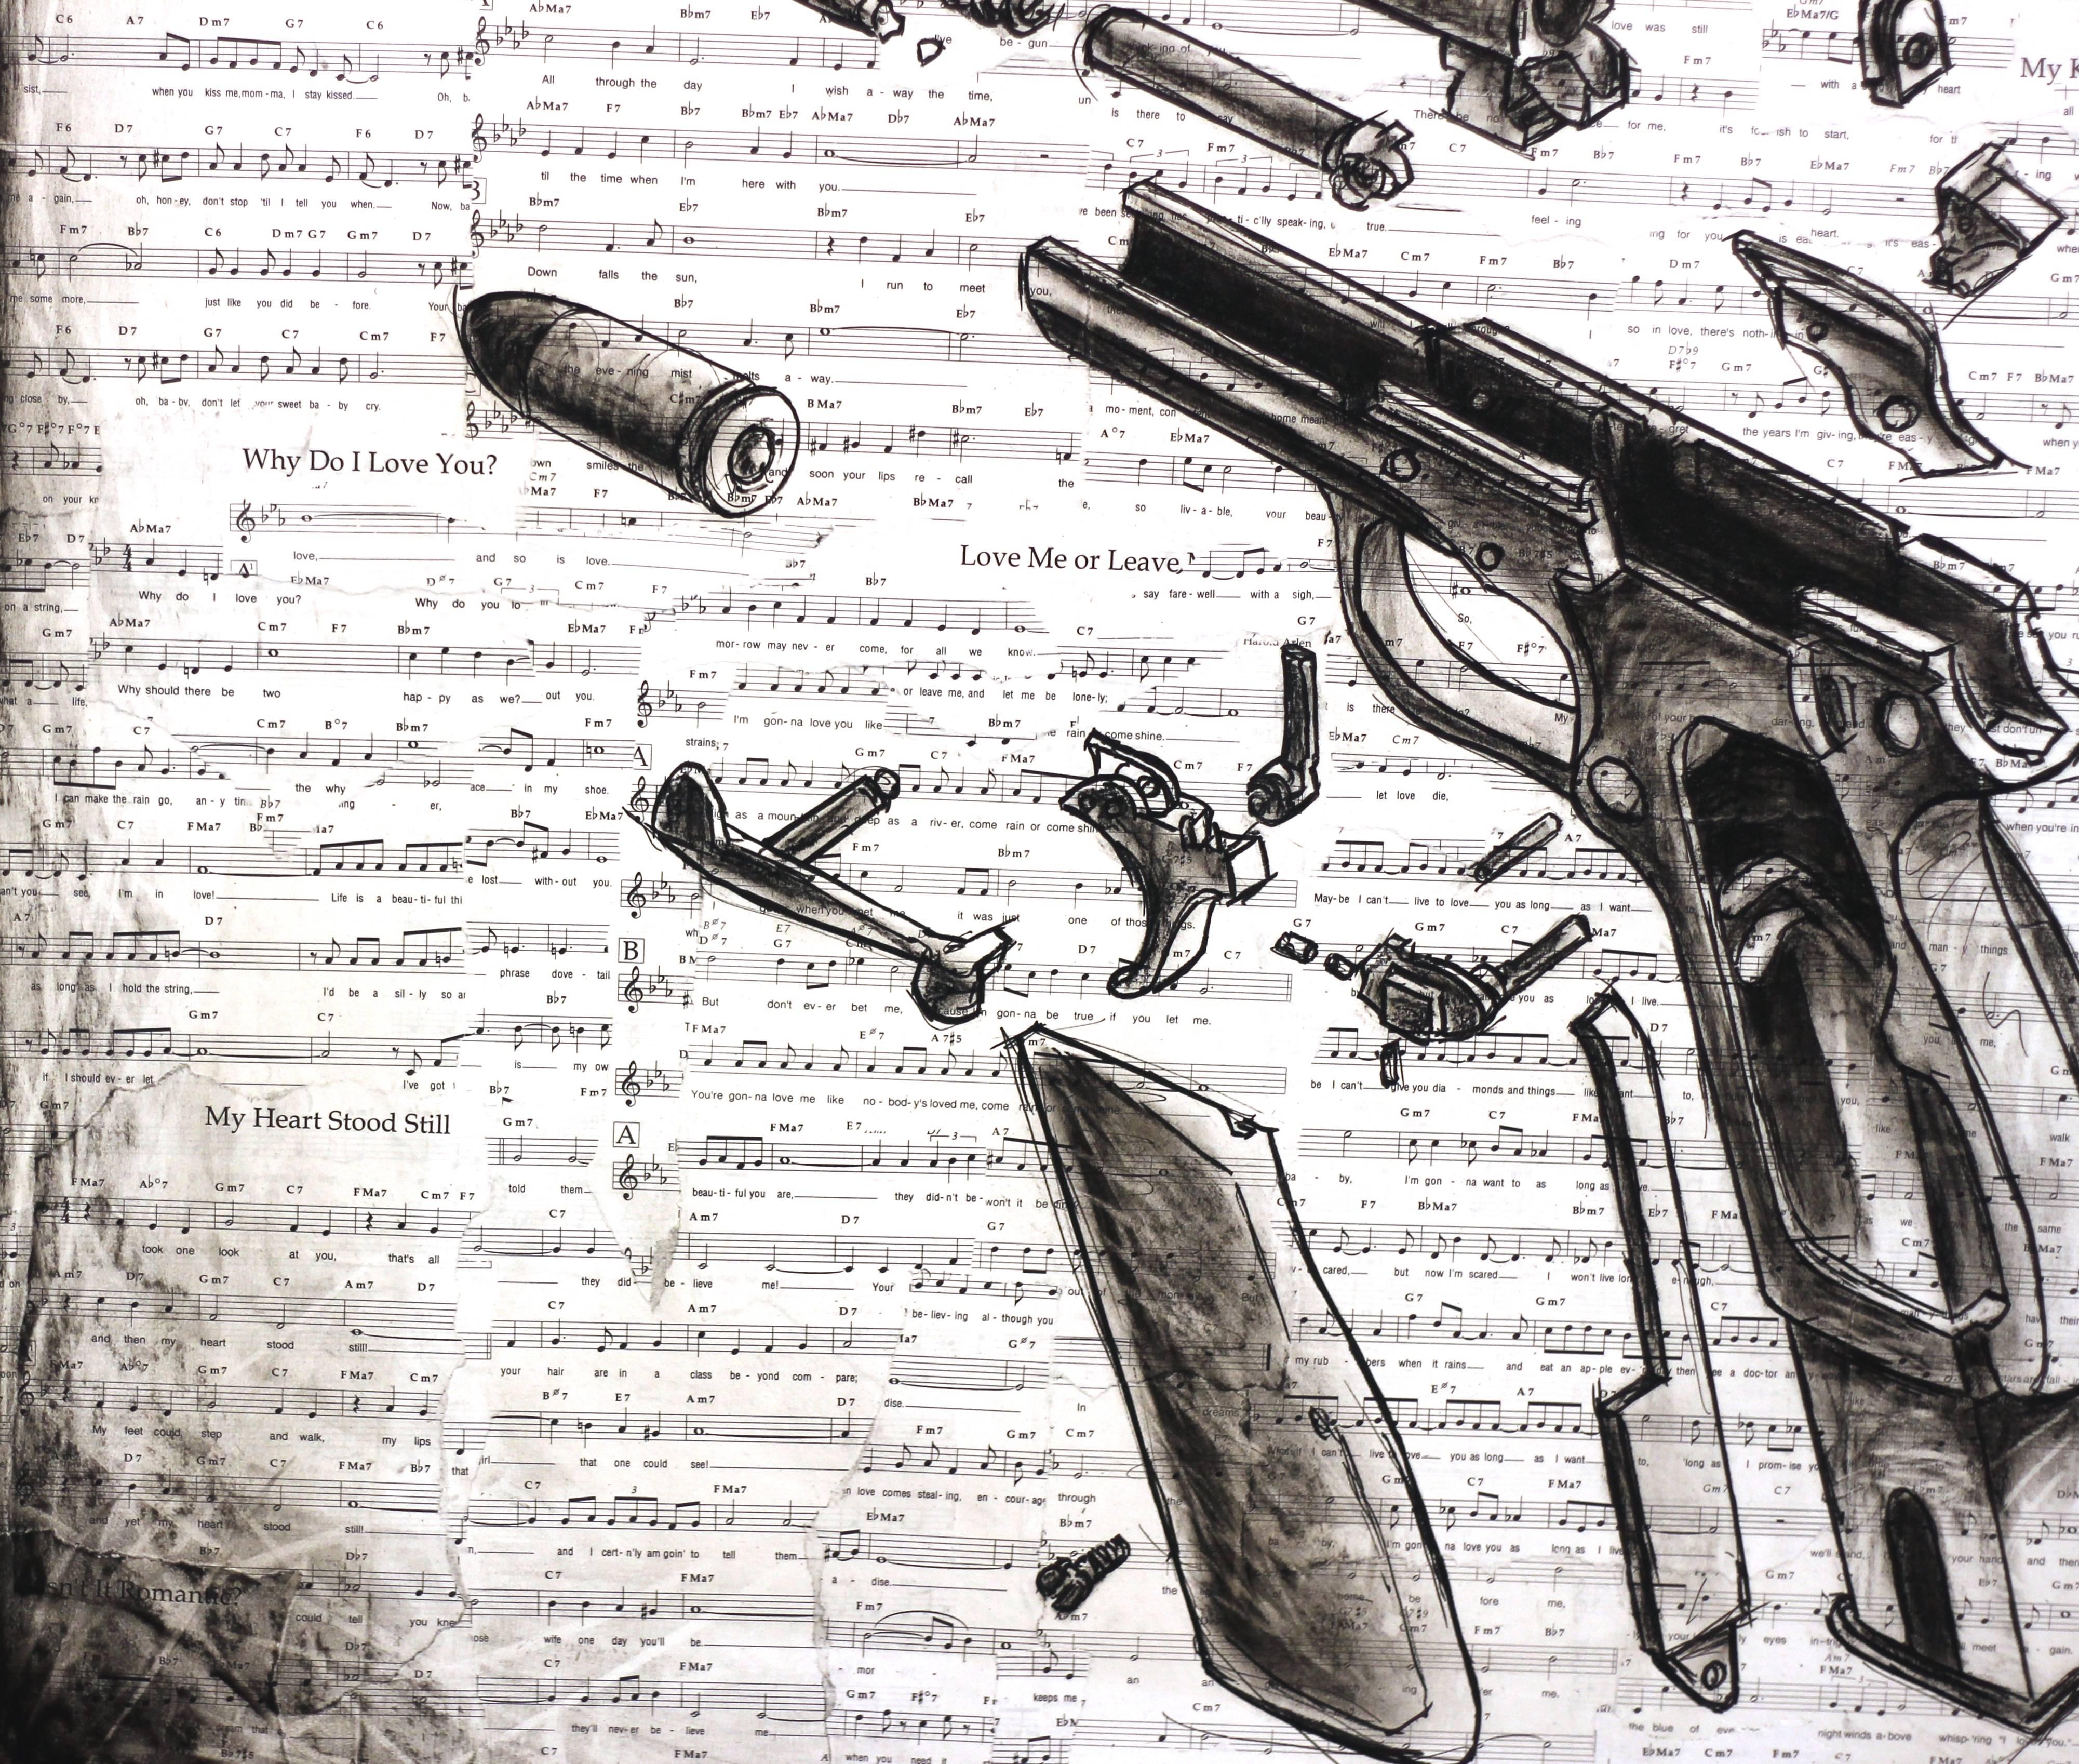 Rhapsody of Love - Original Disassembled Gun Abstract Realistic Painting - Street Art Mixed Media Art by Robert Lebsack